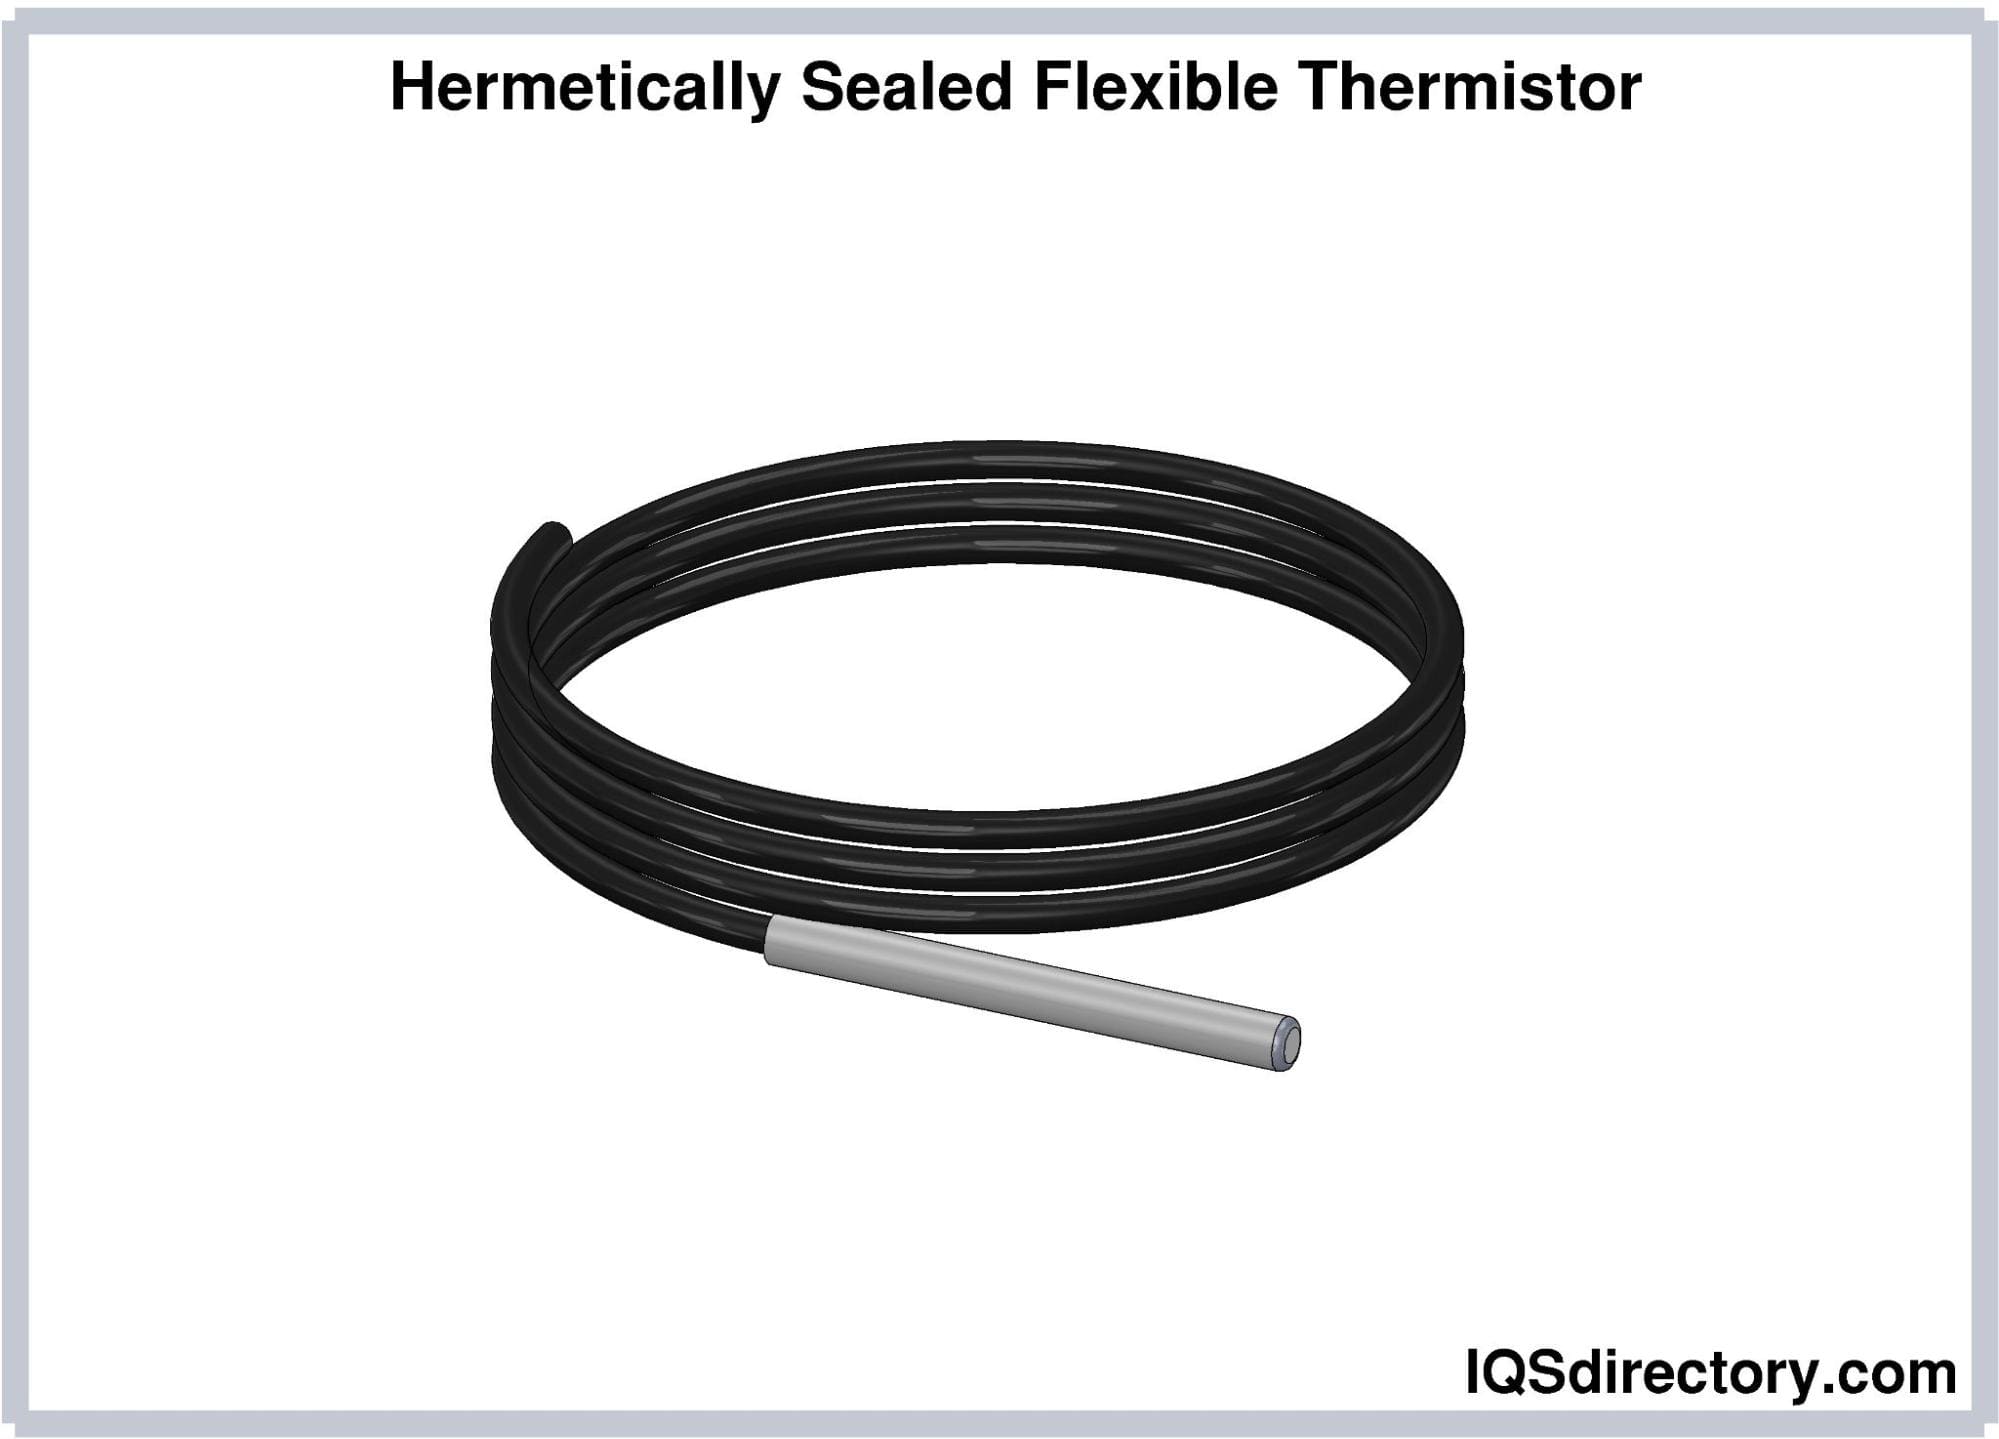 Hermetically Sealed Flexible Thermistor